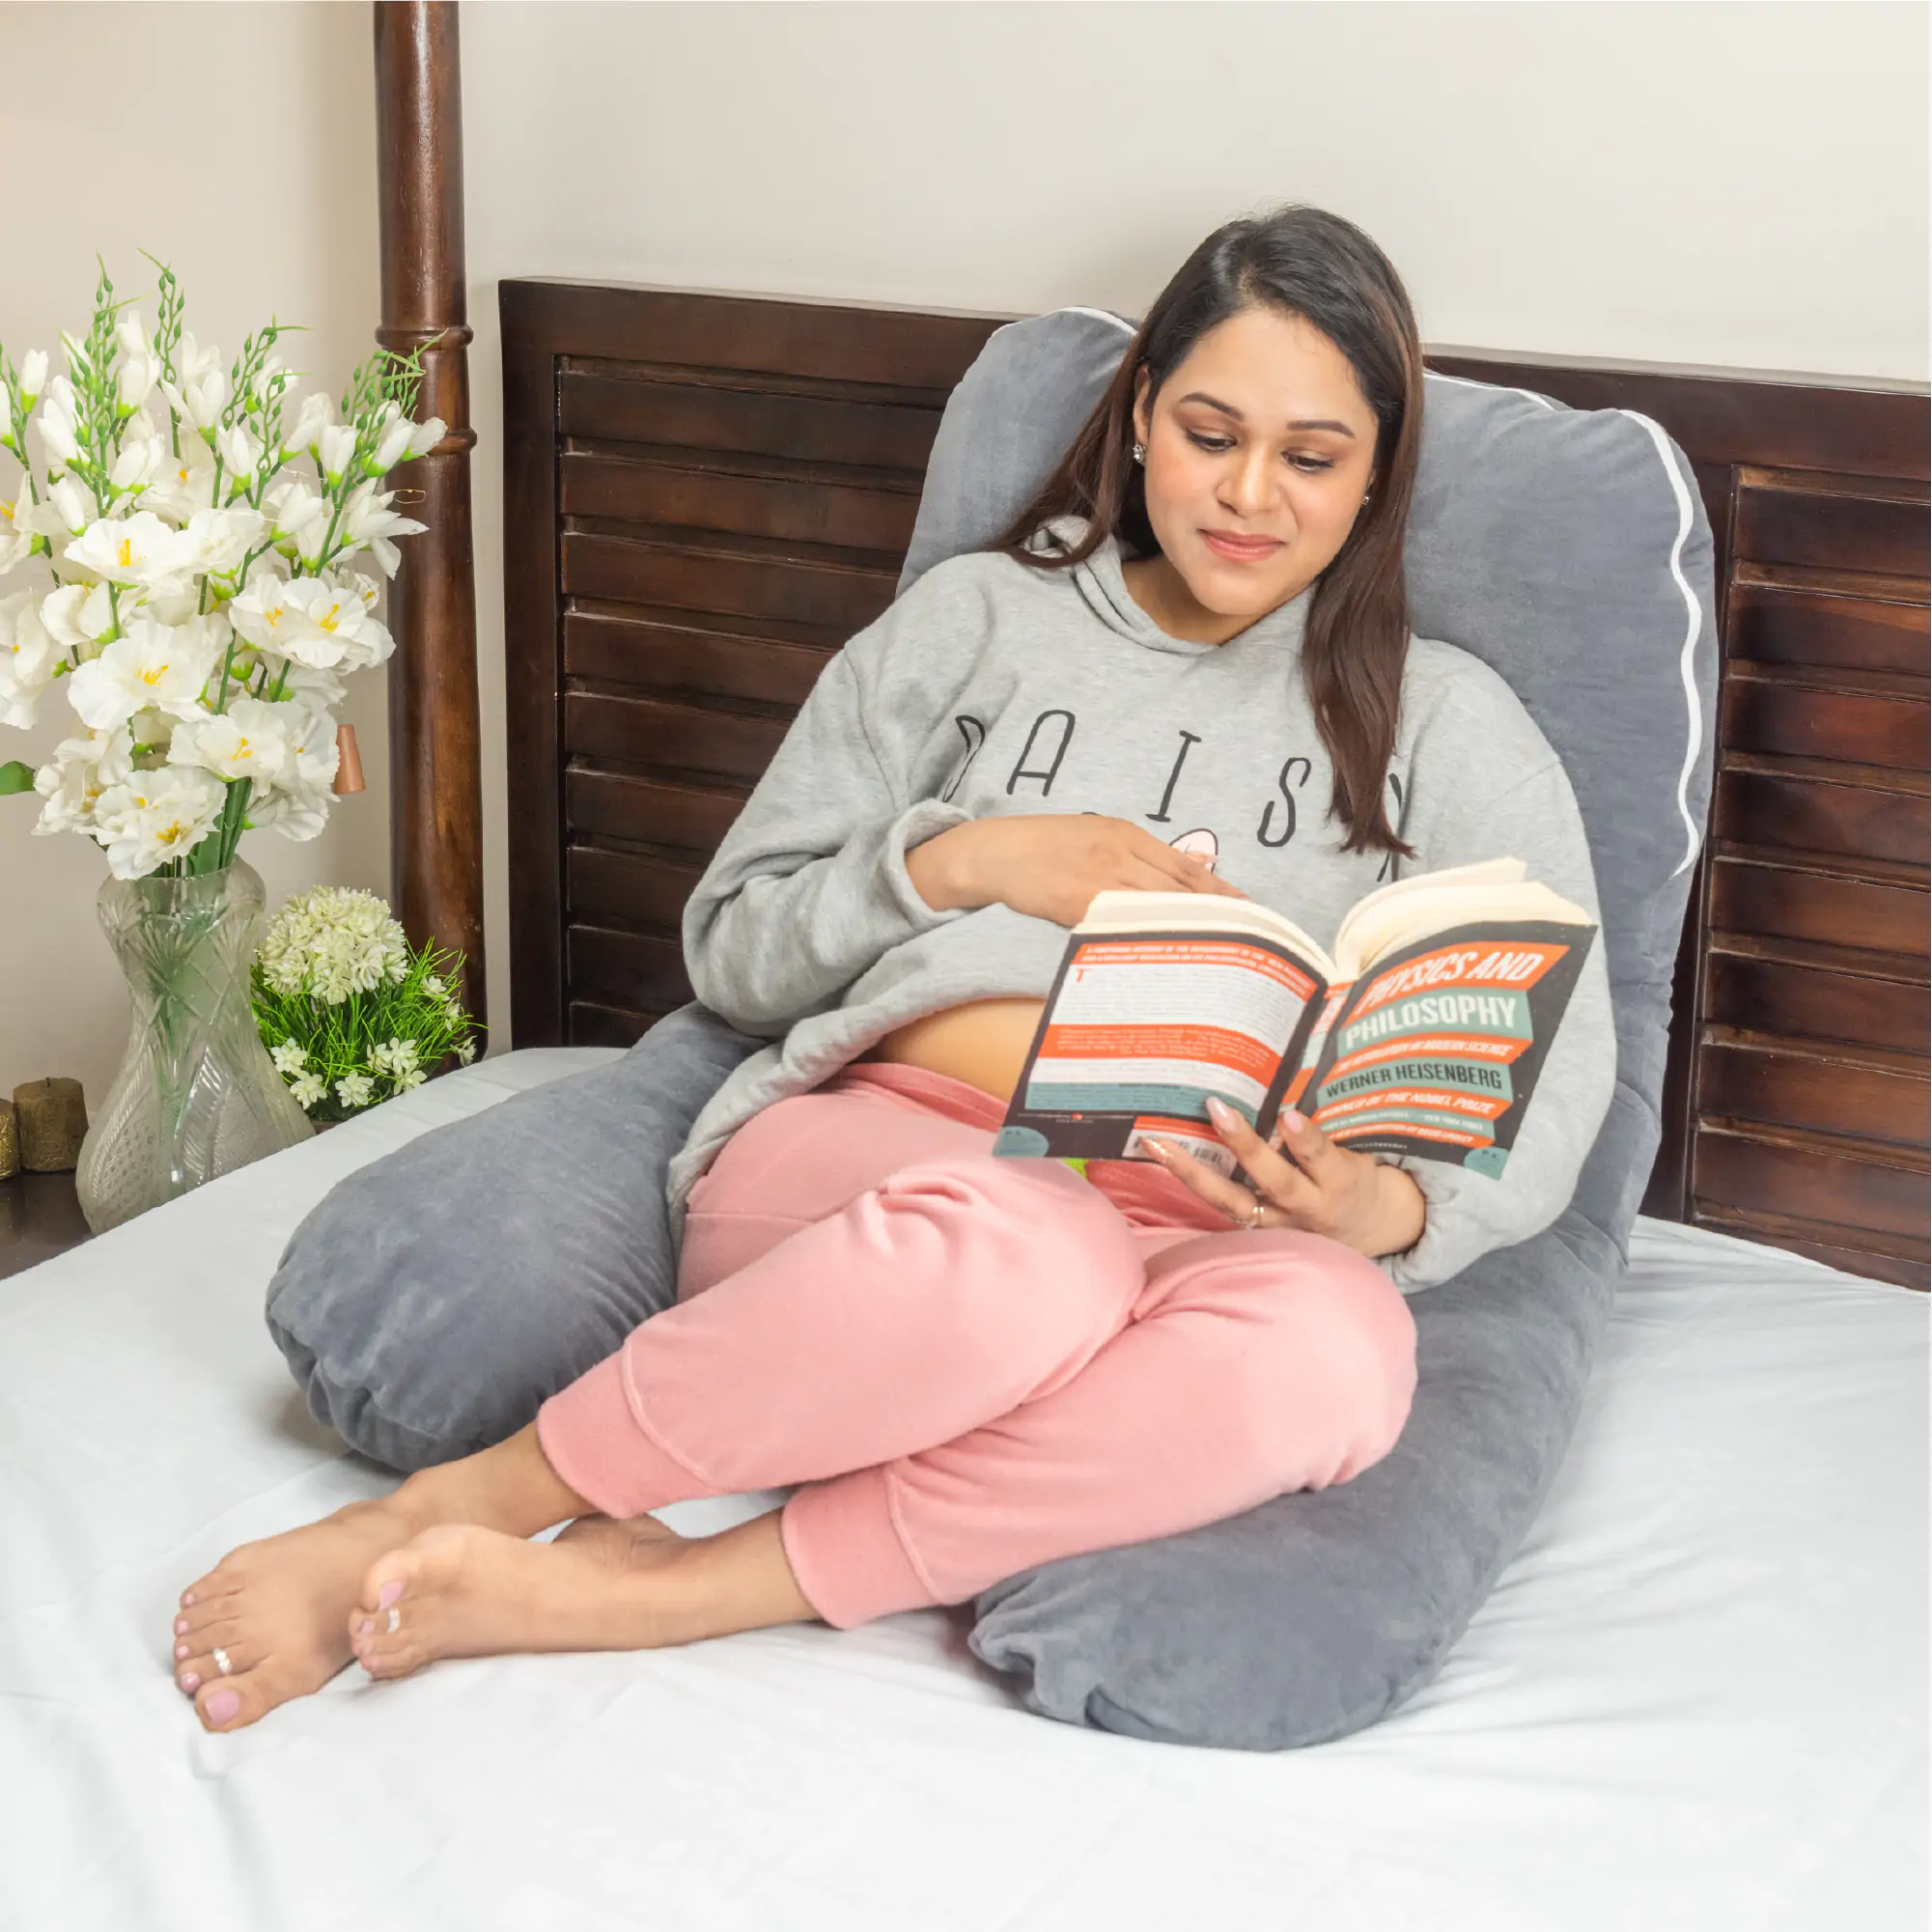 Mylo Premium Pregnancy & Maternity Support Pillow - Grey